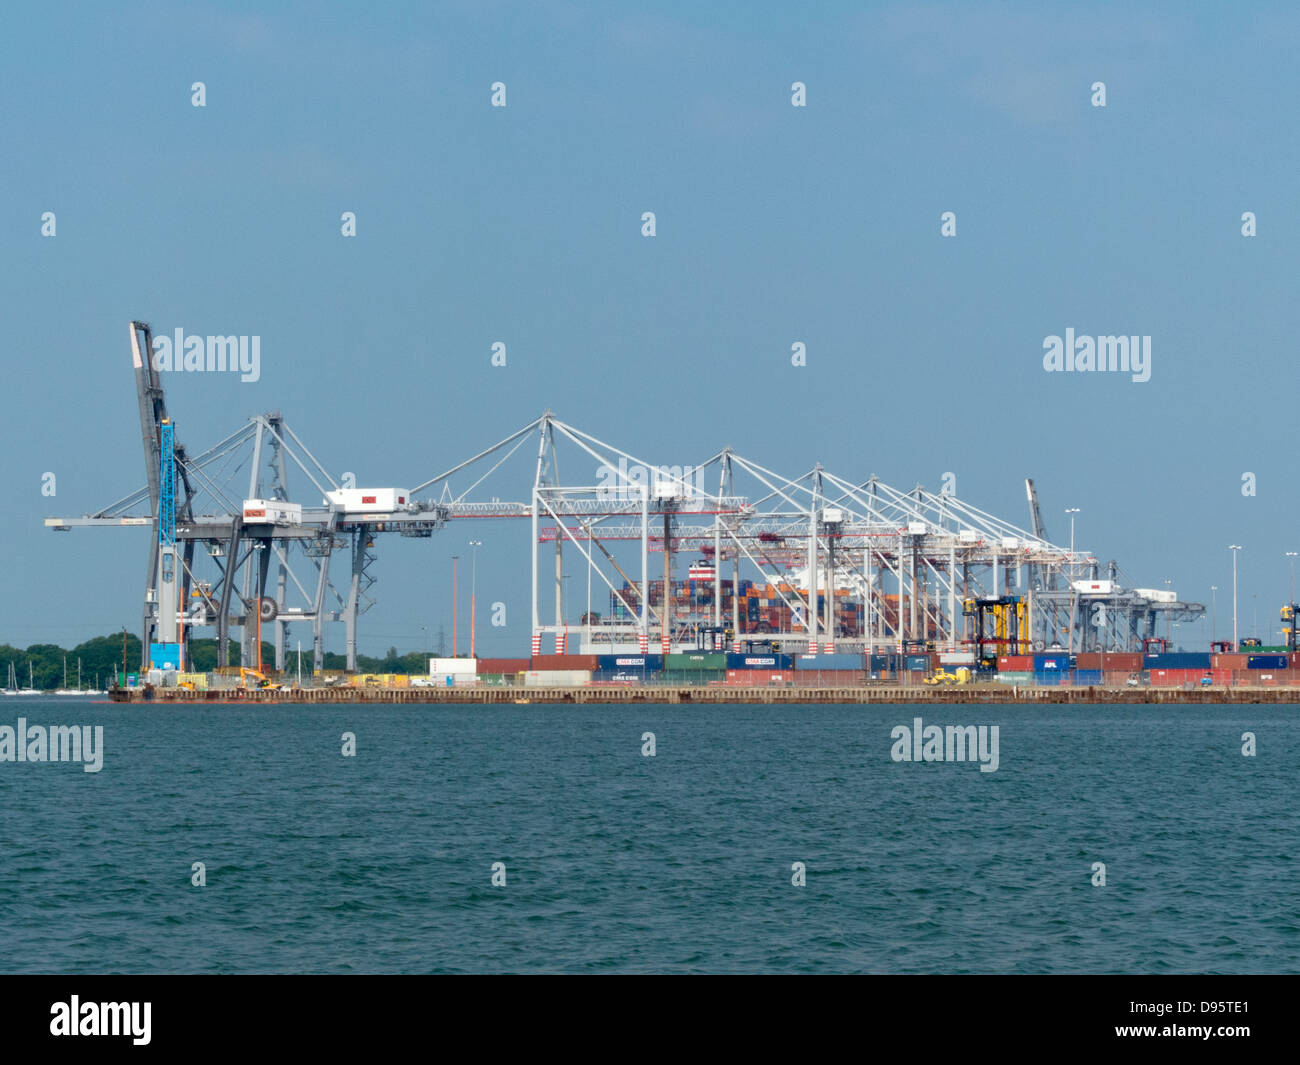 Southampton-Container-Hafen große Terminal handling Schiffe Krane Fracht Export Import Dock Kai Kai riesige große massiv ta Stockfoto